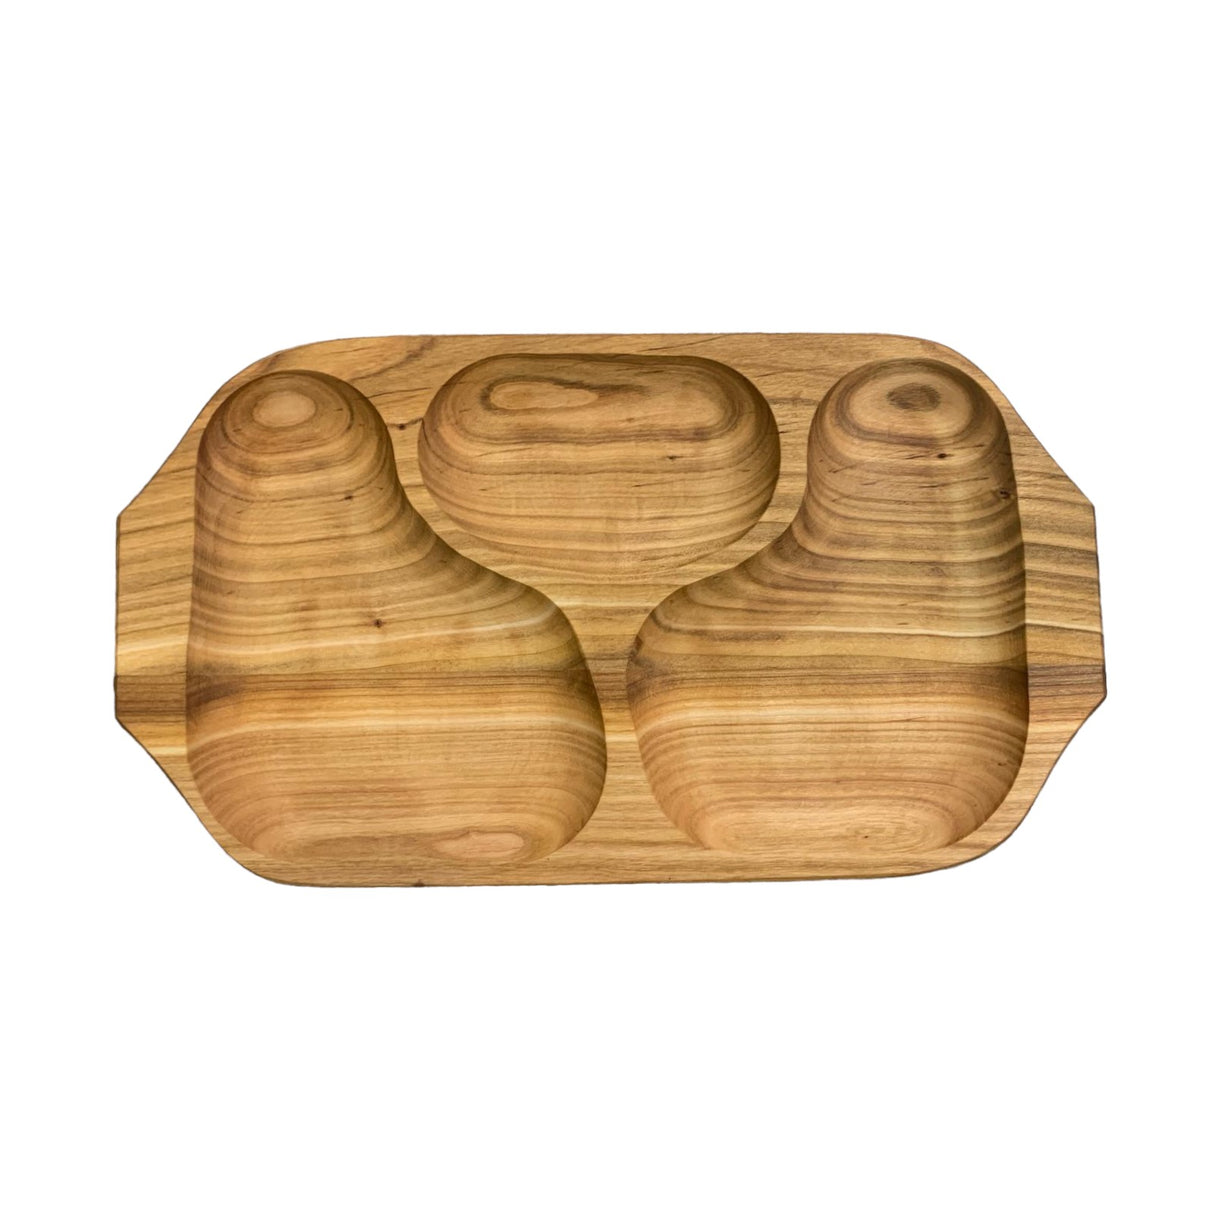 Platou cu 3 Compartimente din lemn,46x26 cm